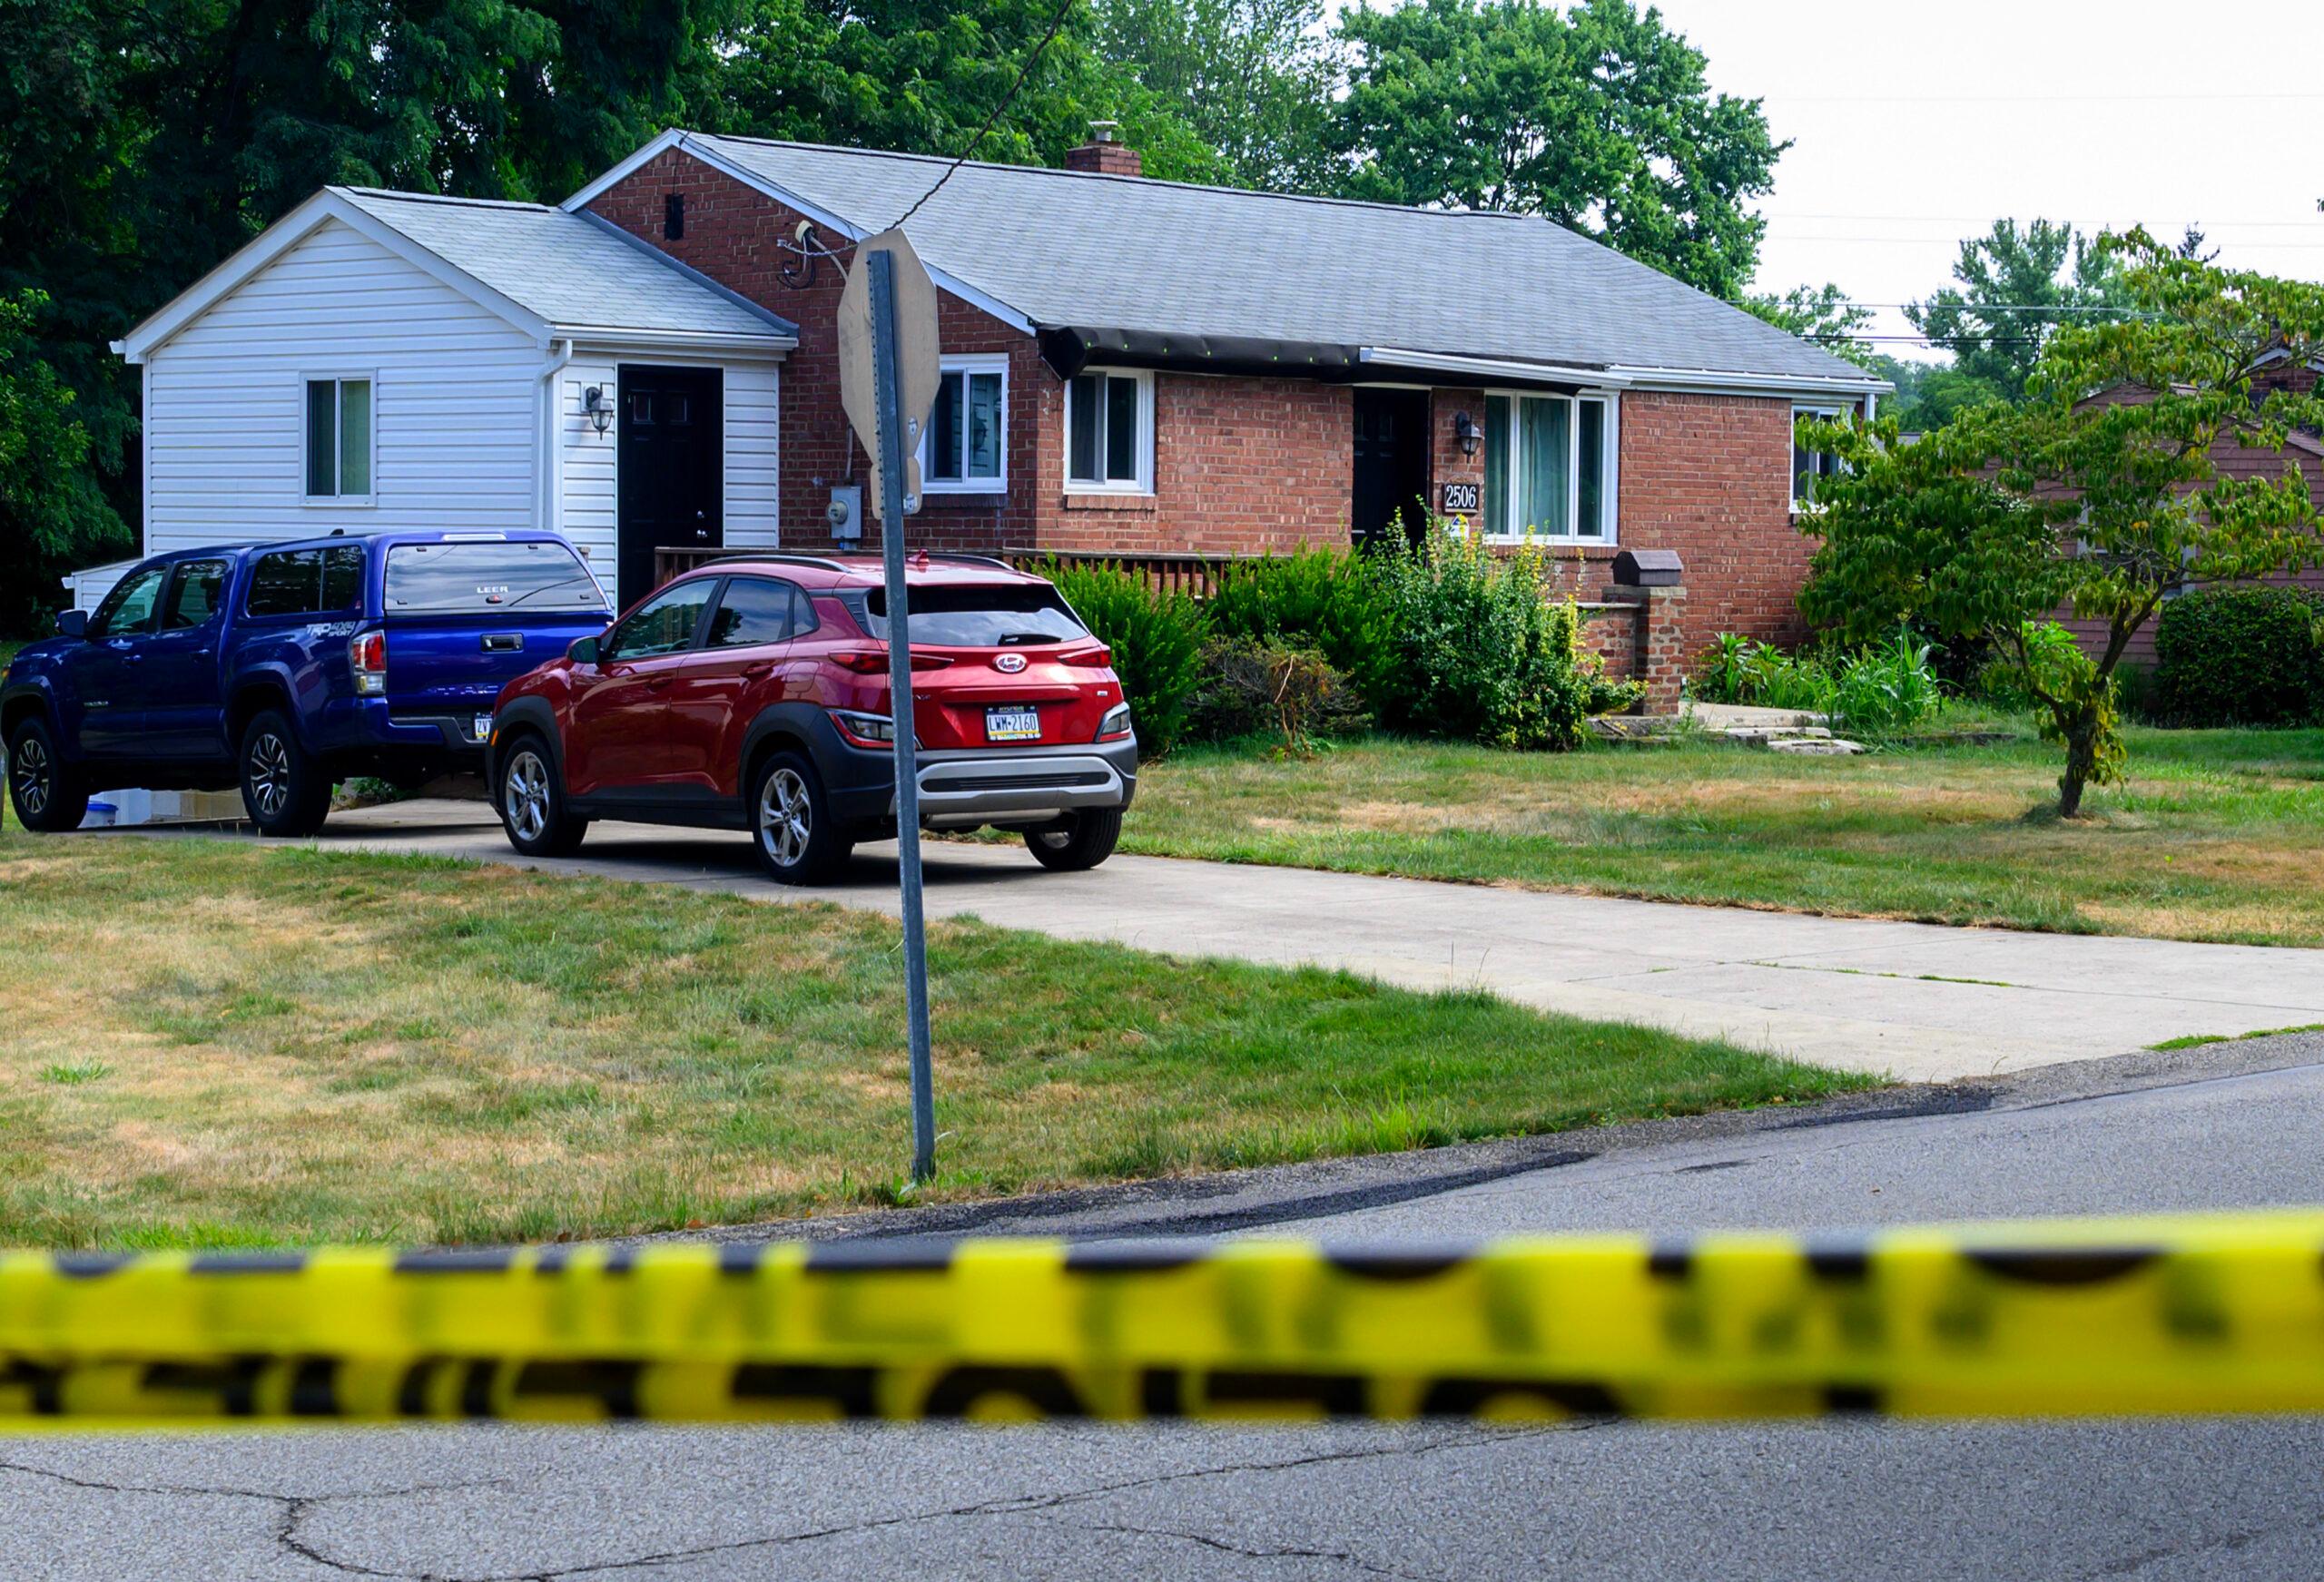 Home of Thomas Matthew Crook Suspected Shooter of Donald Trump